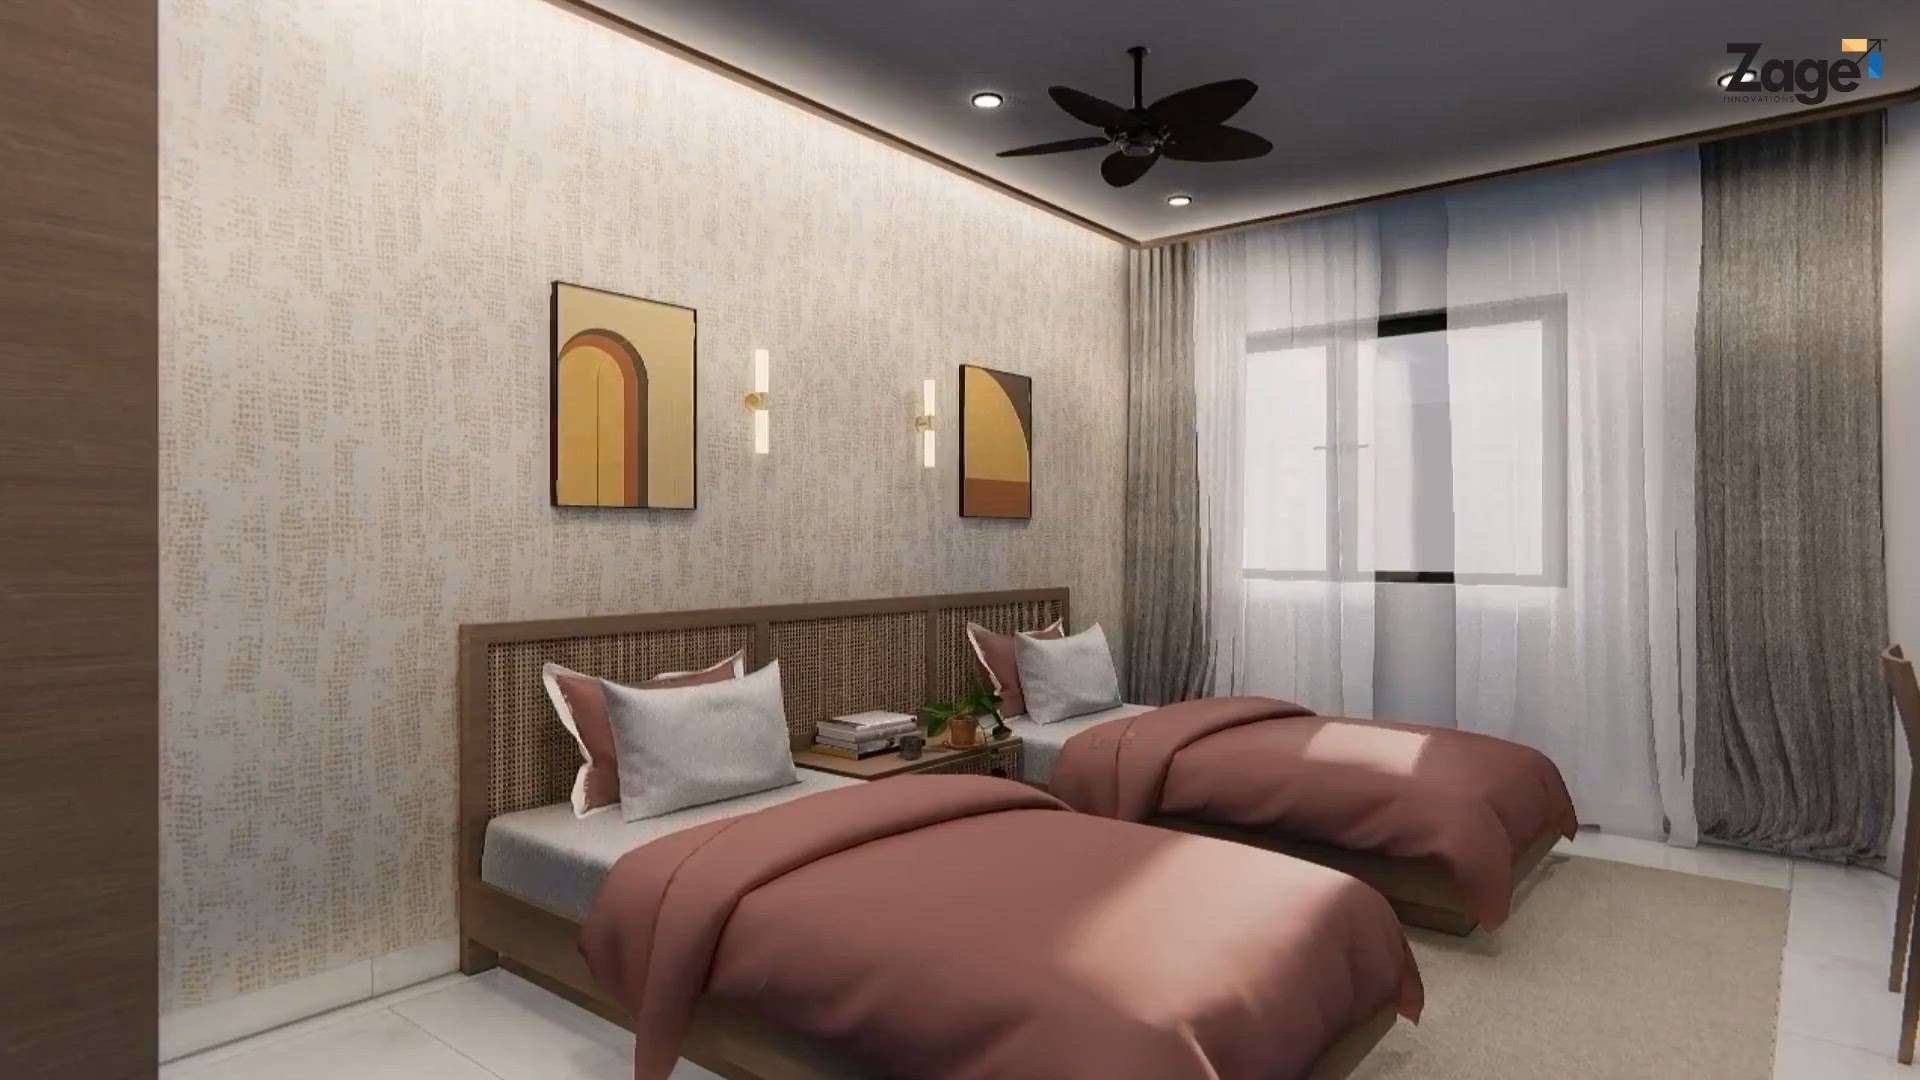 4BHK|2500sqft|kochi
Bedroom 3d walkthrough
.
.
 #3d #corridordesign #corridor #walkthrough_animations #Ernakulam #zageinnovations #InteriorDesigner #interiordesignkerala #modernminimalism